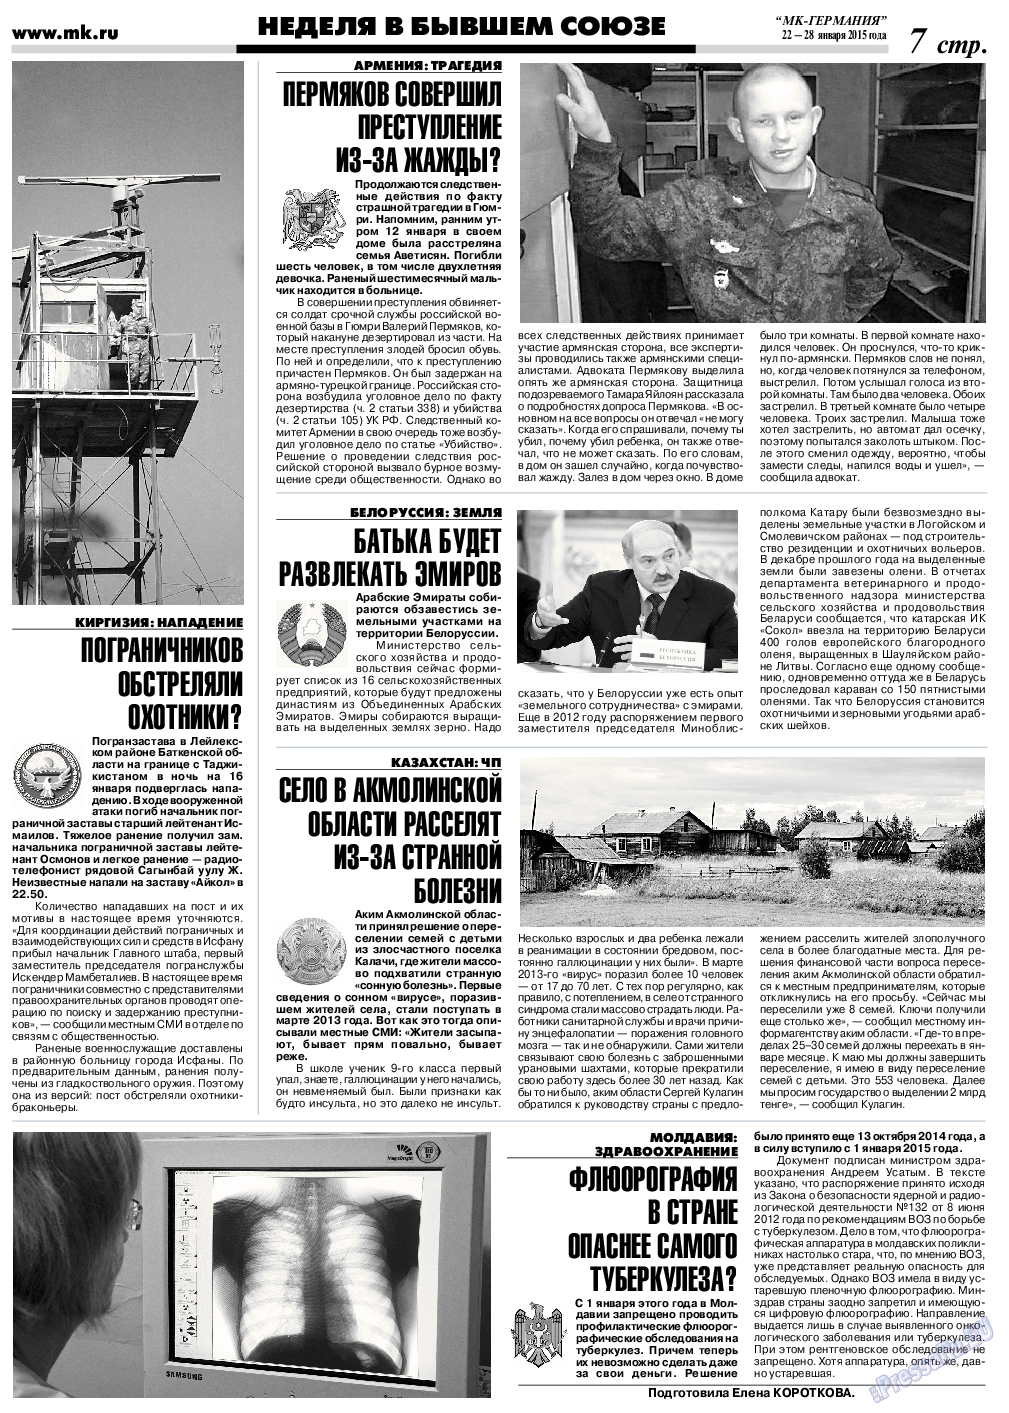 МК-Германия, газета. 2015 №4 стр.7